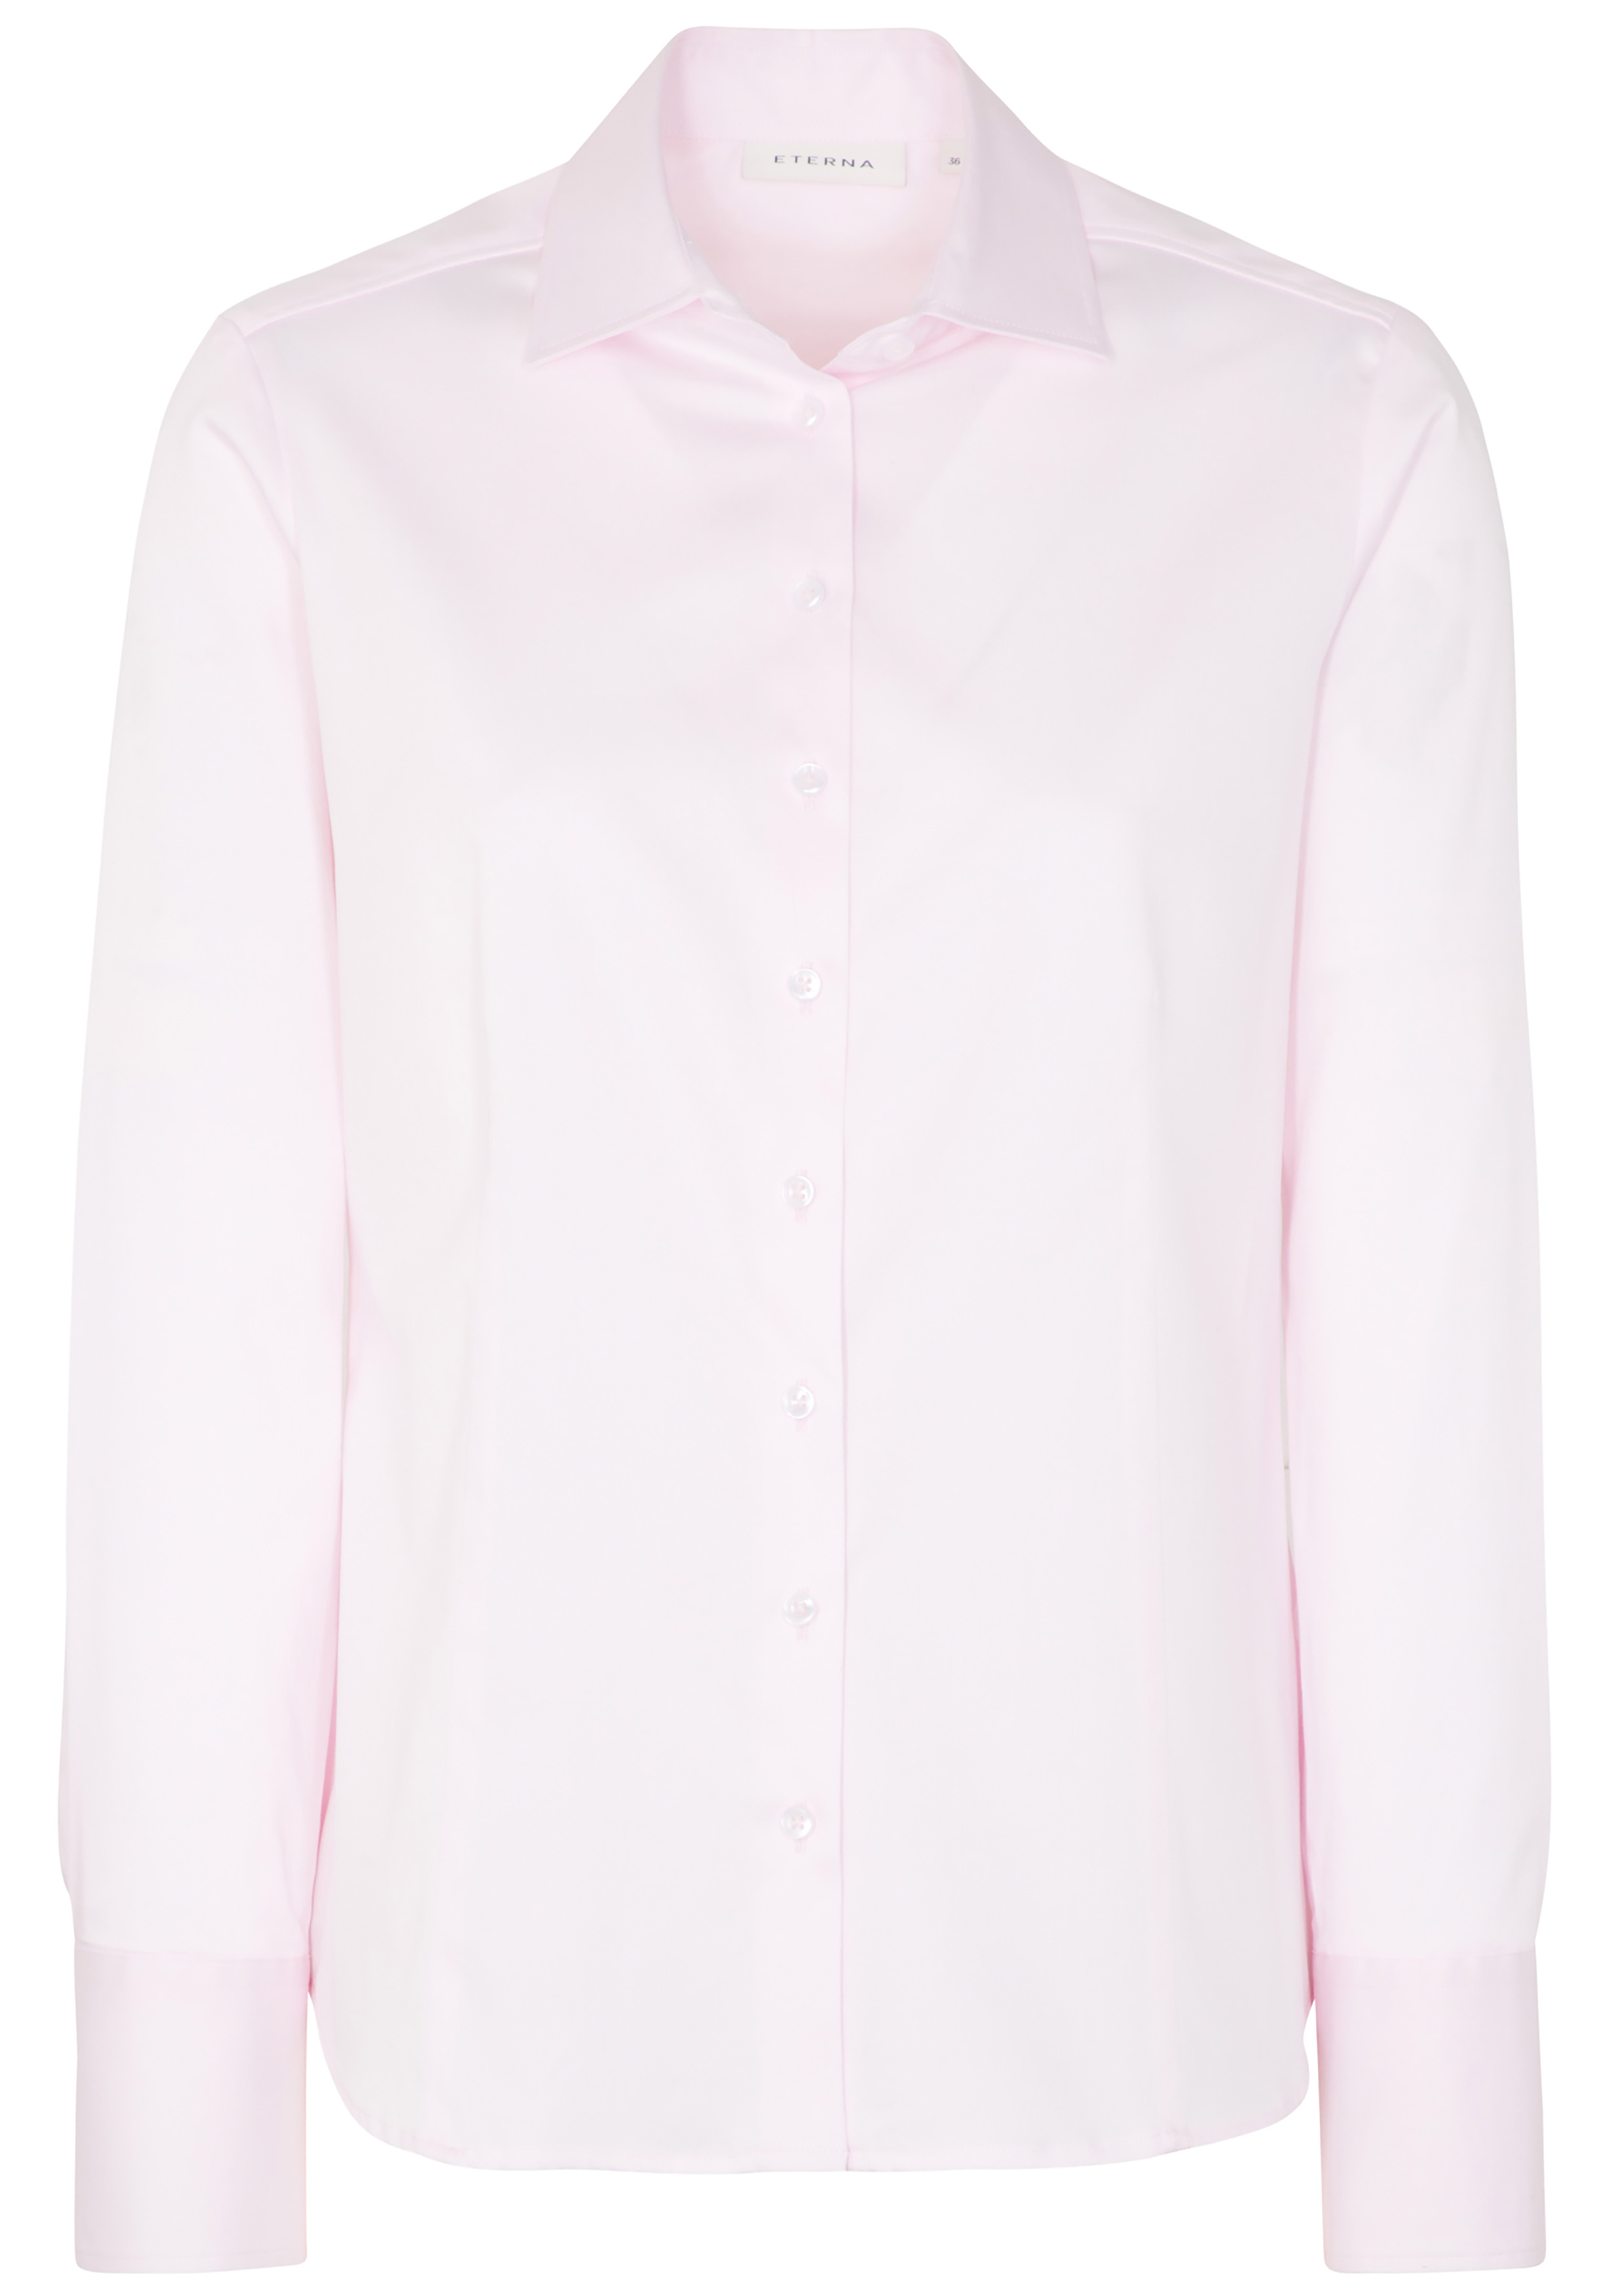 ETERNA dames blouse modern classic, stretch satijnbinding, roze